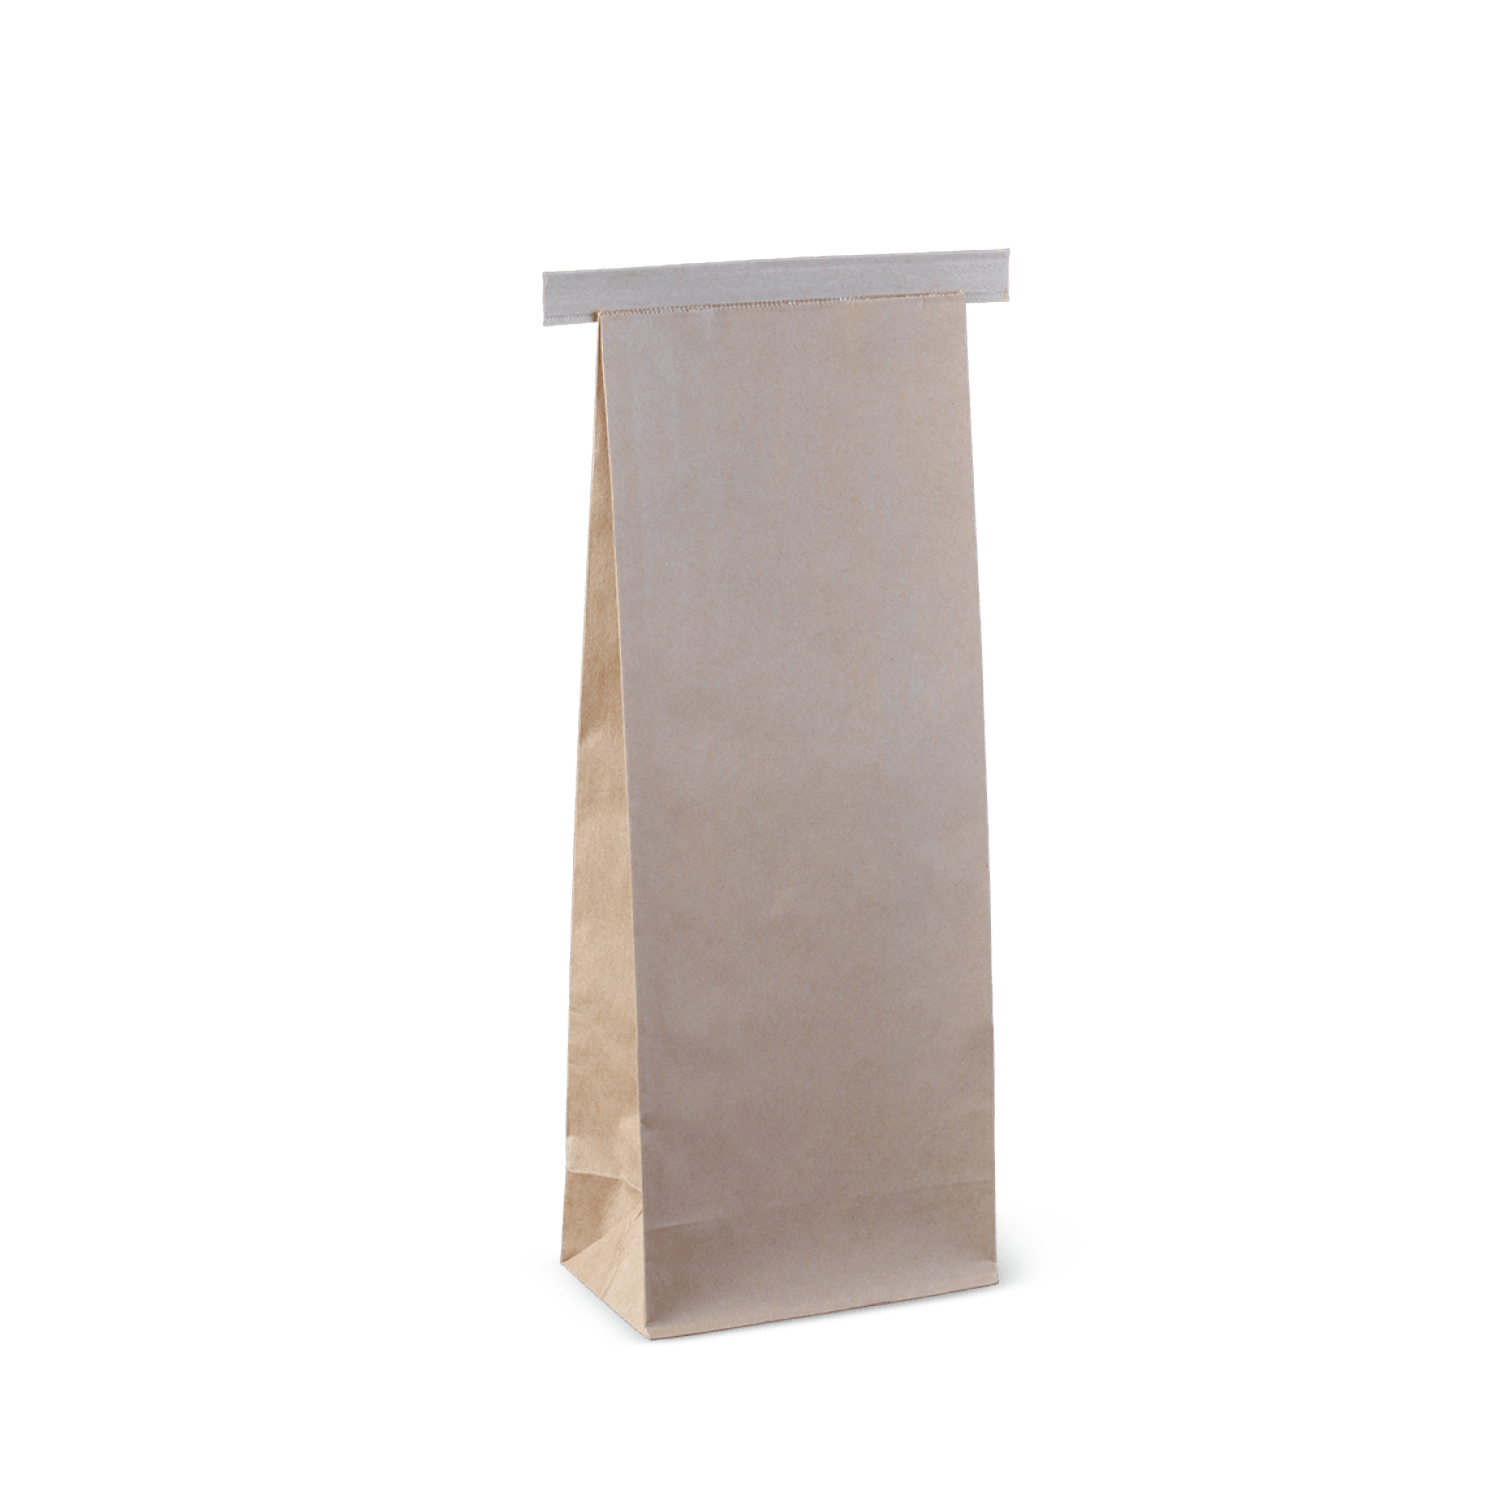 Bag Retail 1kg Brown C532S0010 (327x127x76mm) Tin Tie (Carton 500)